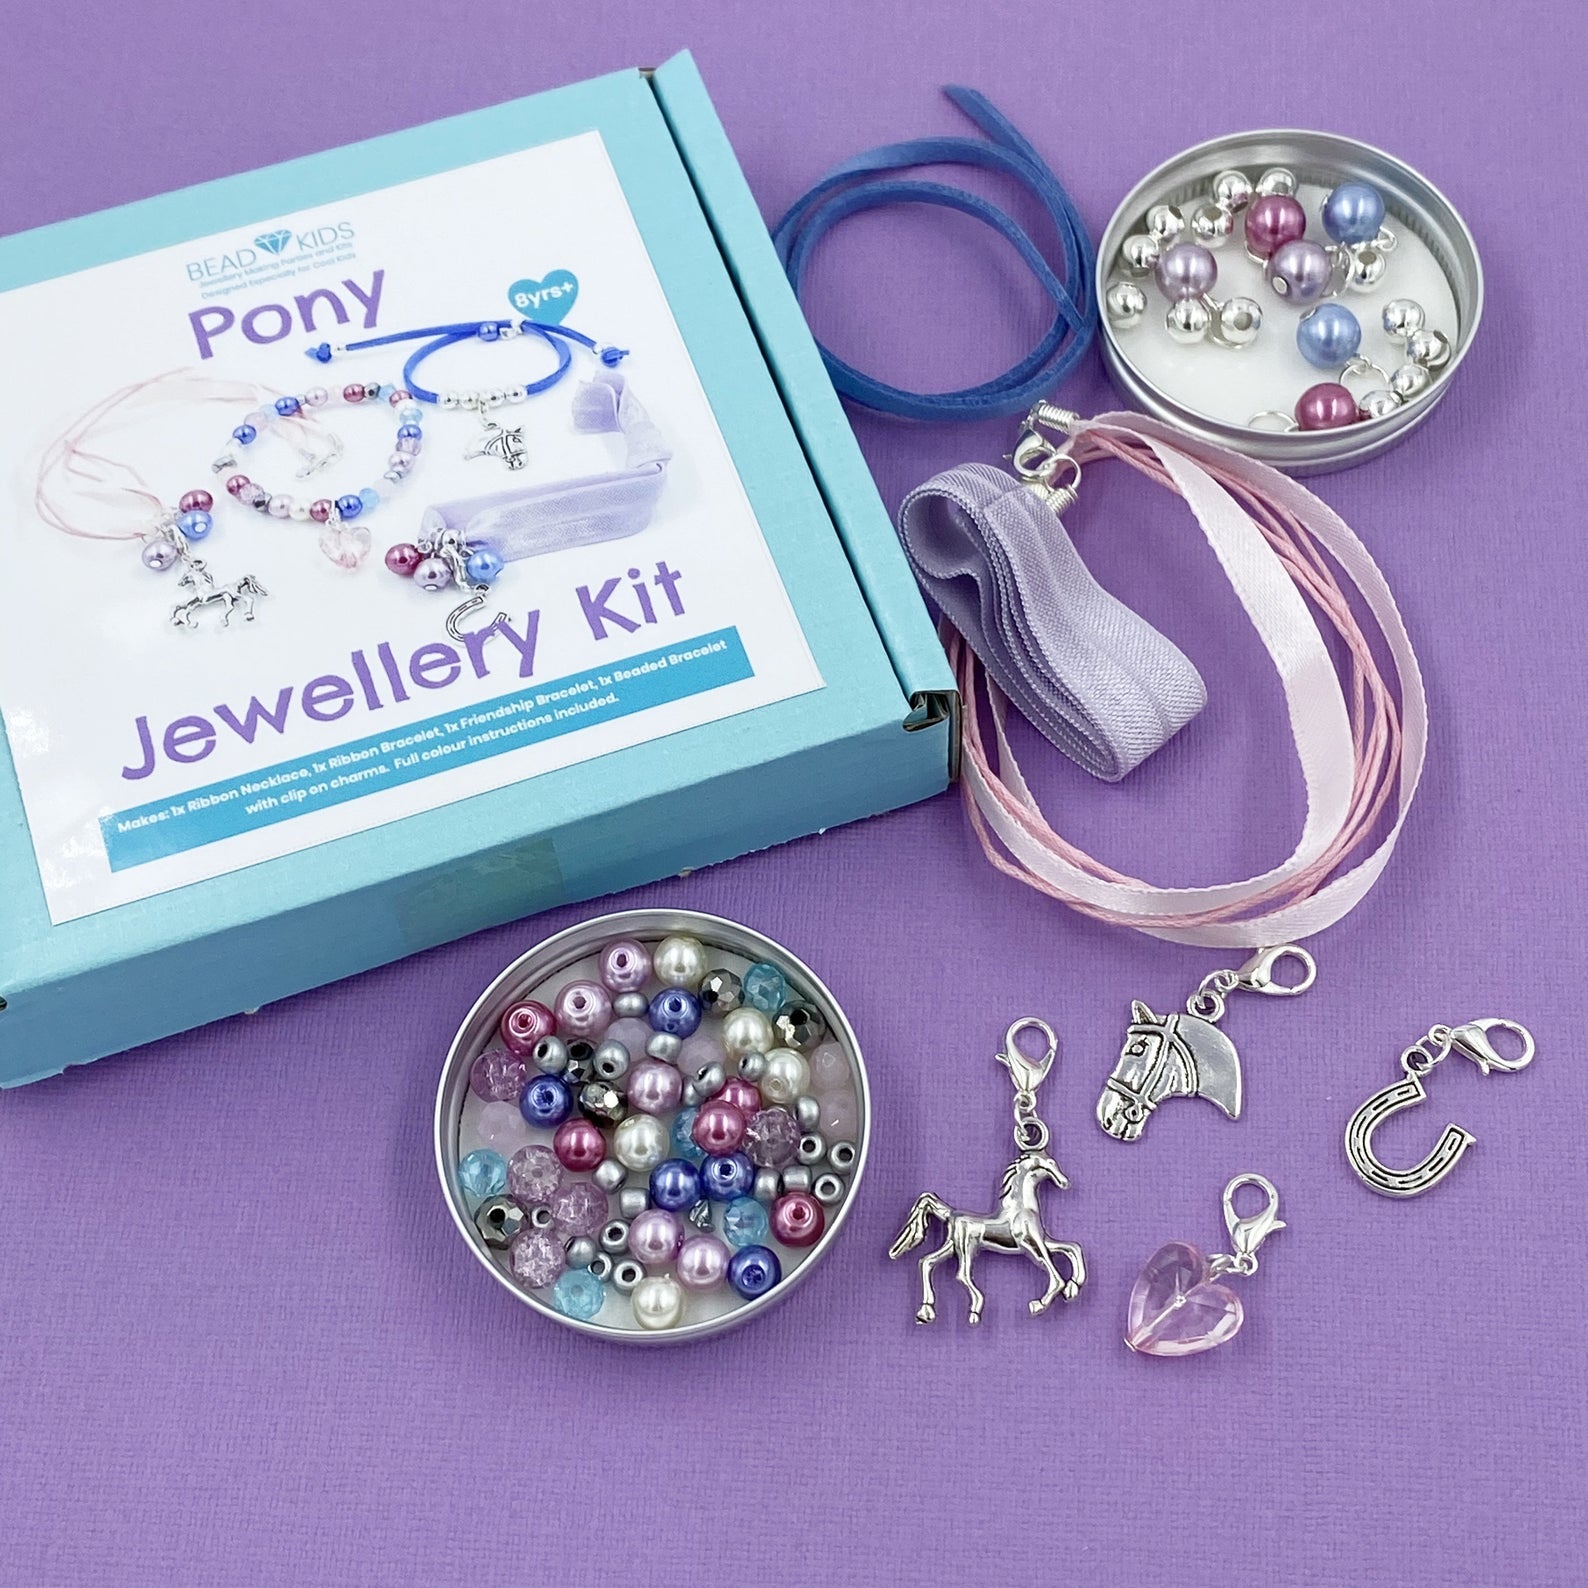 pony--bead-kids-jewellery-kit